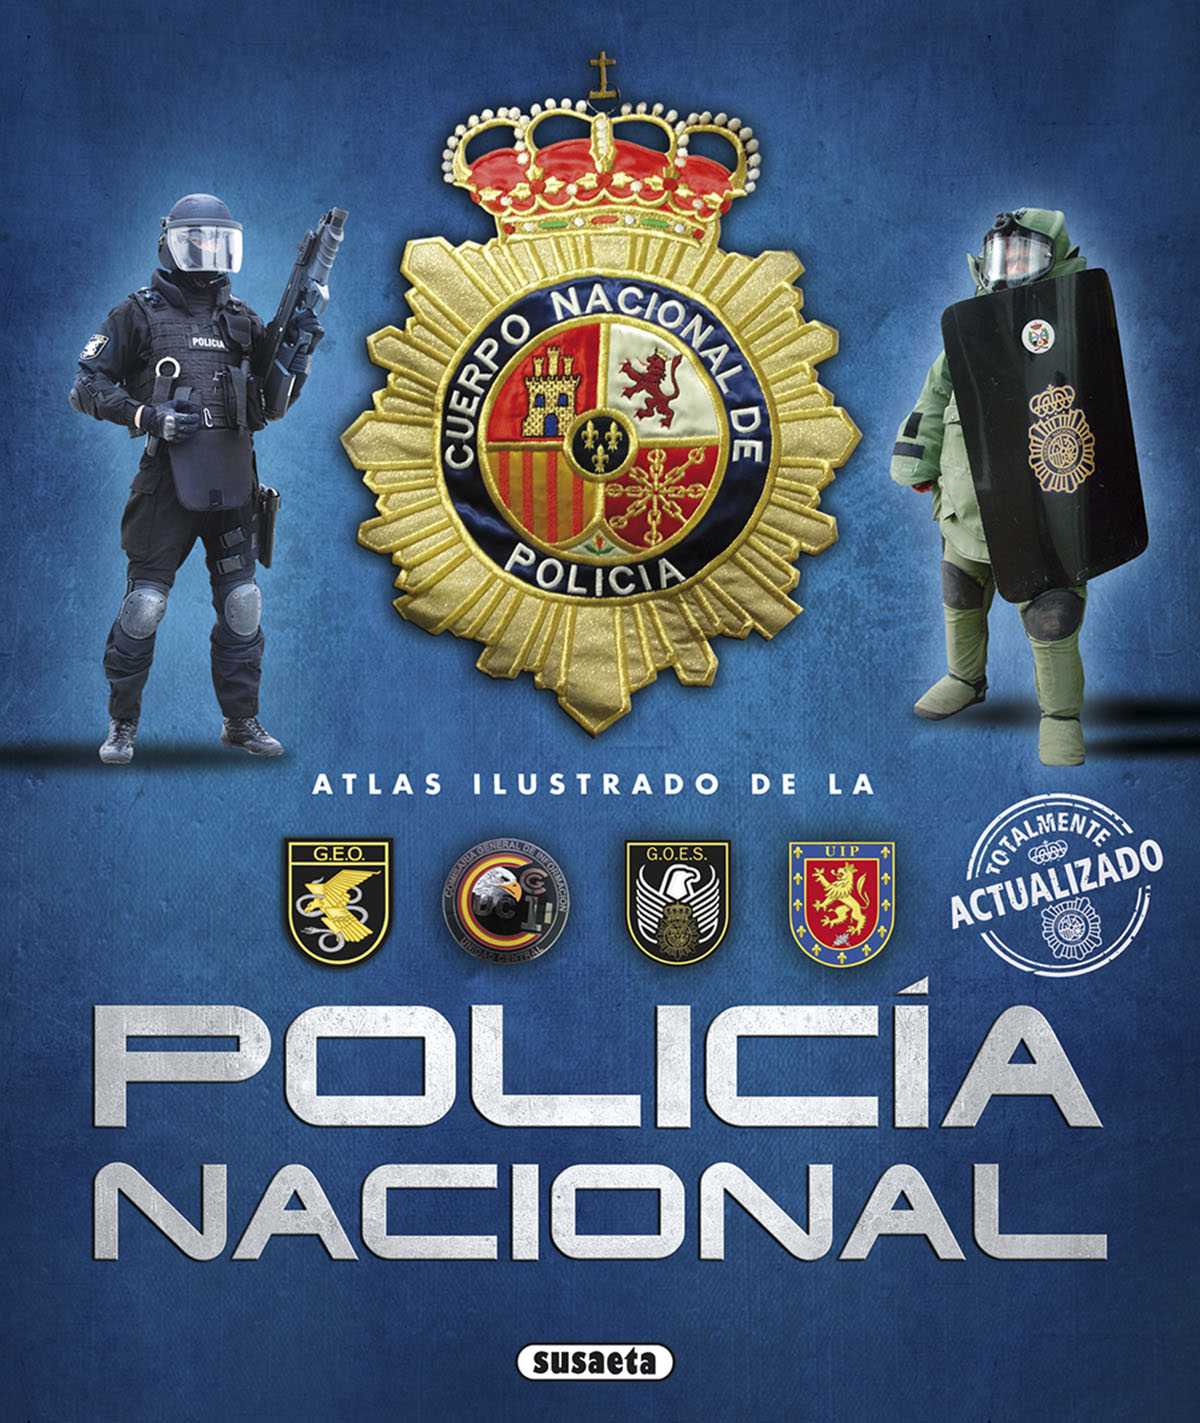 La Polica Nacional